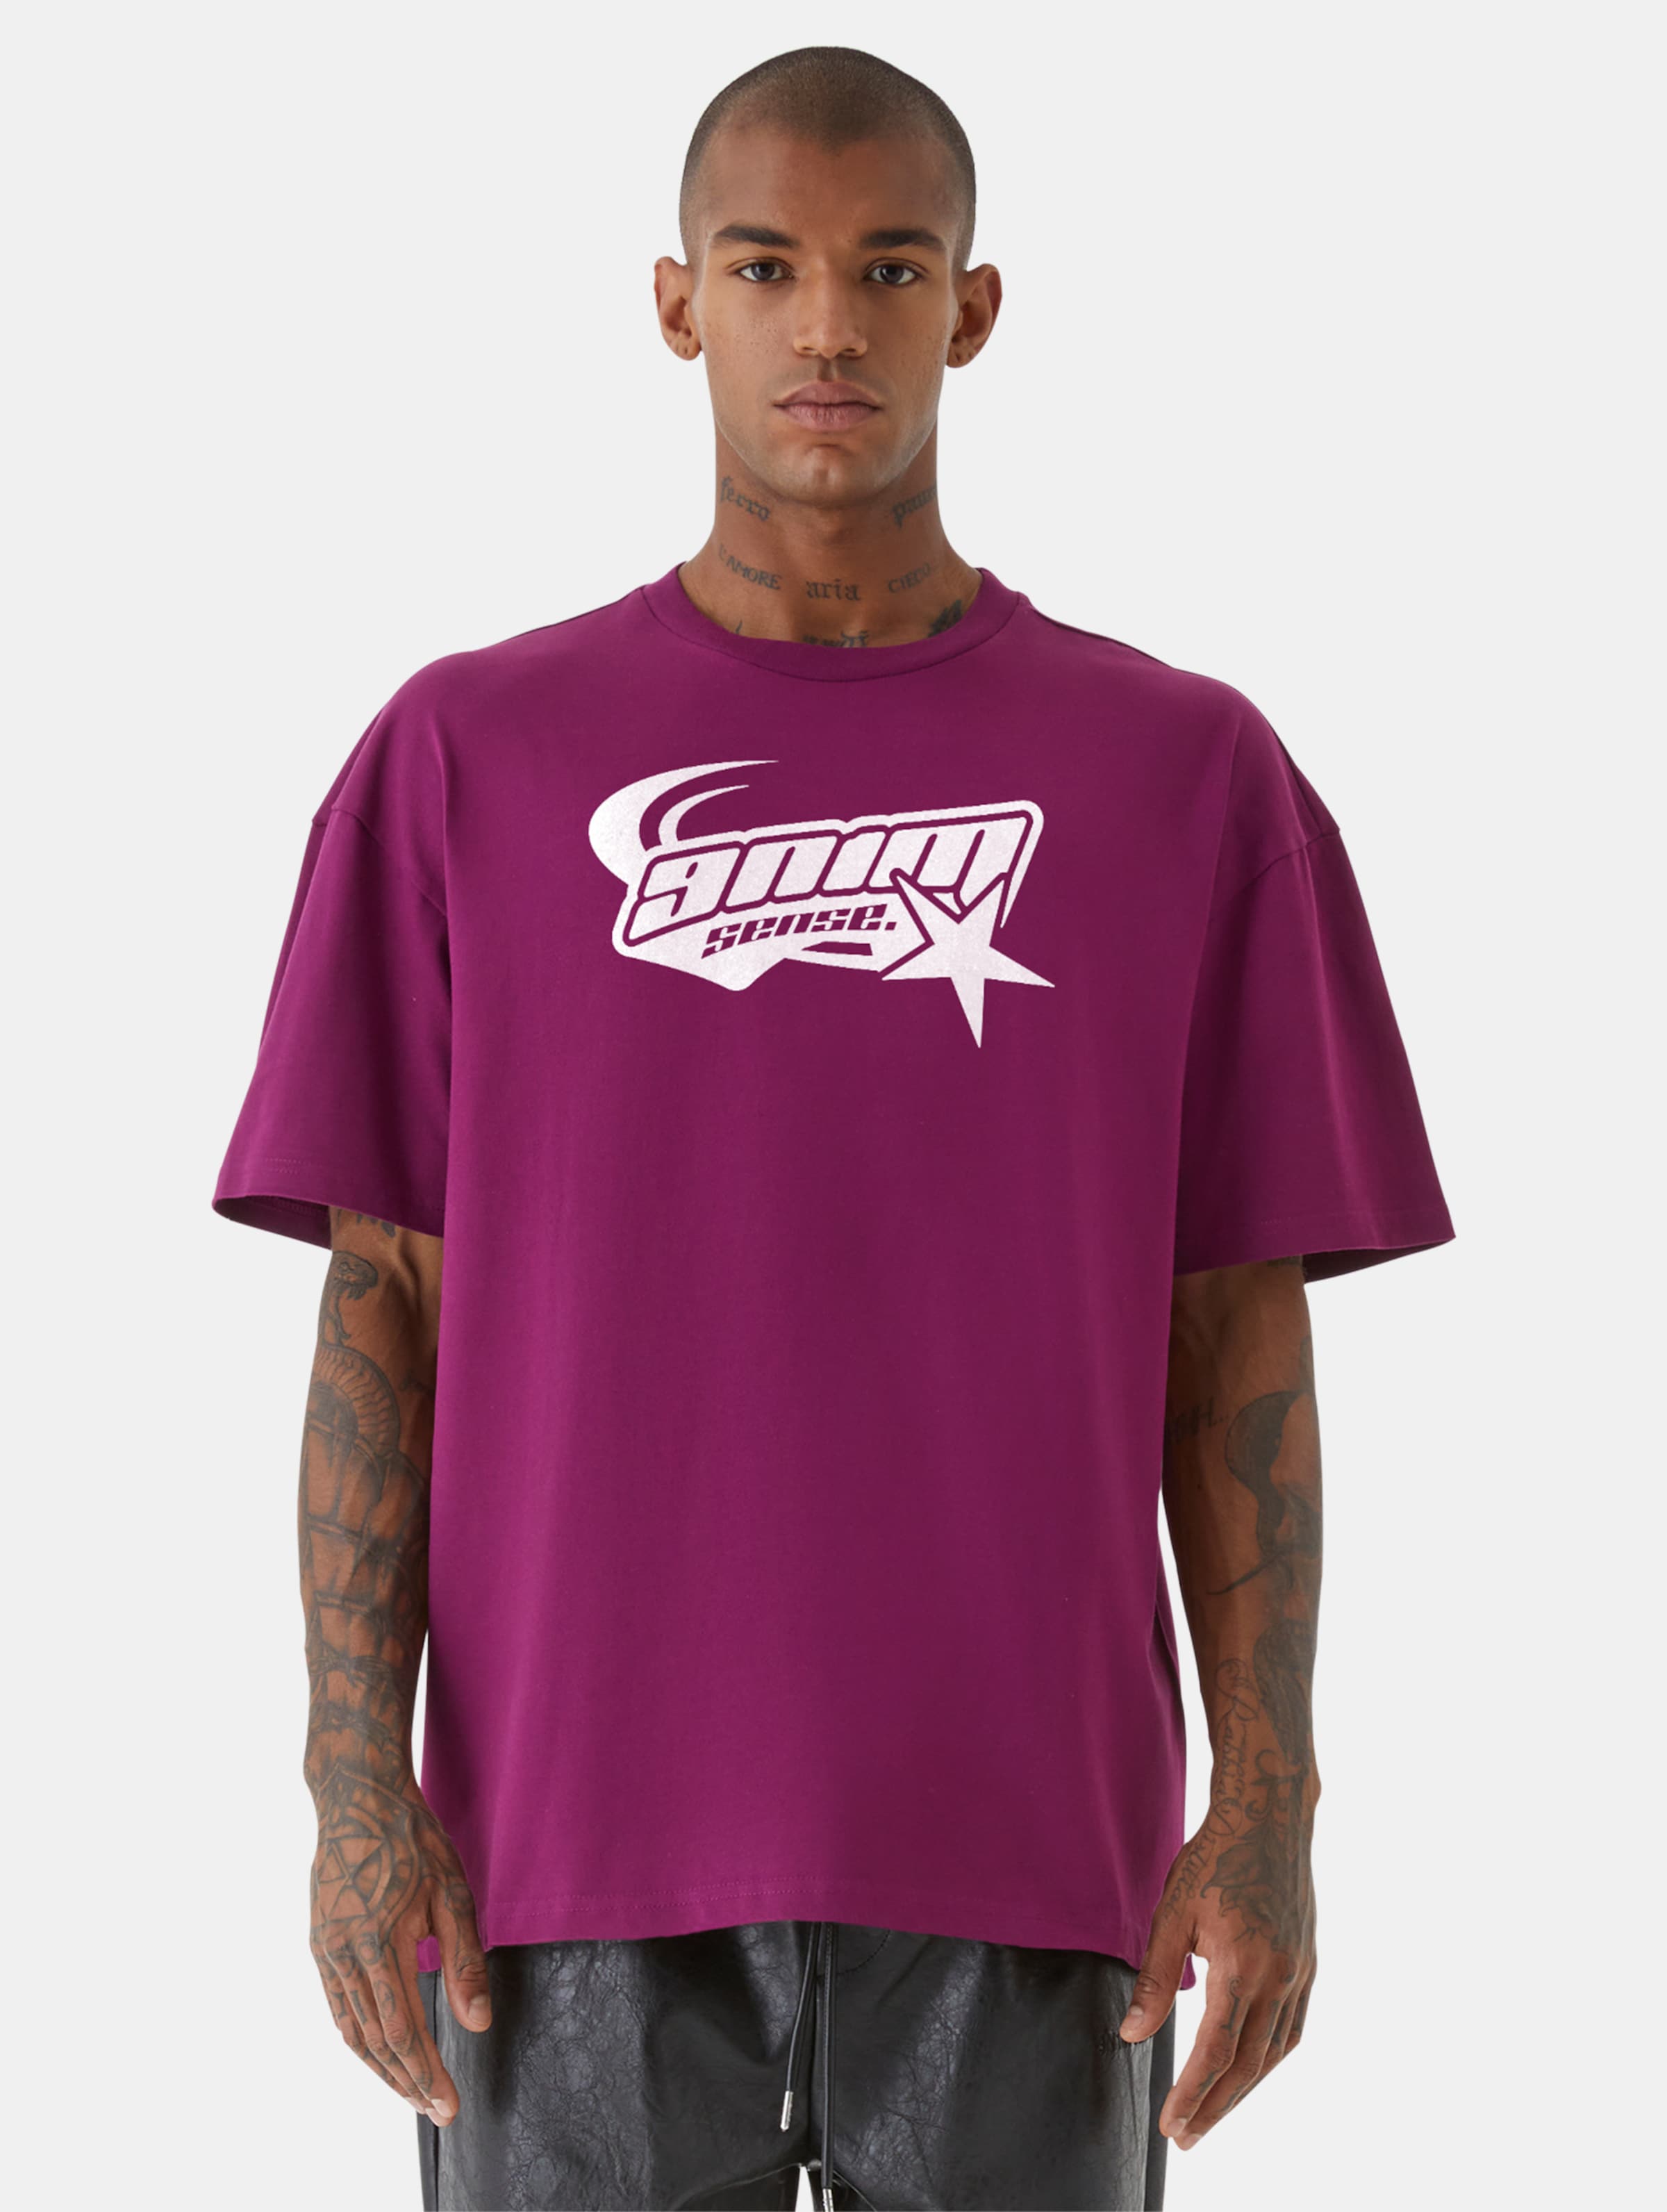 9N1M SENSE STAR T-Shirt Männer,Unisex op kleur violet, Maat M